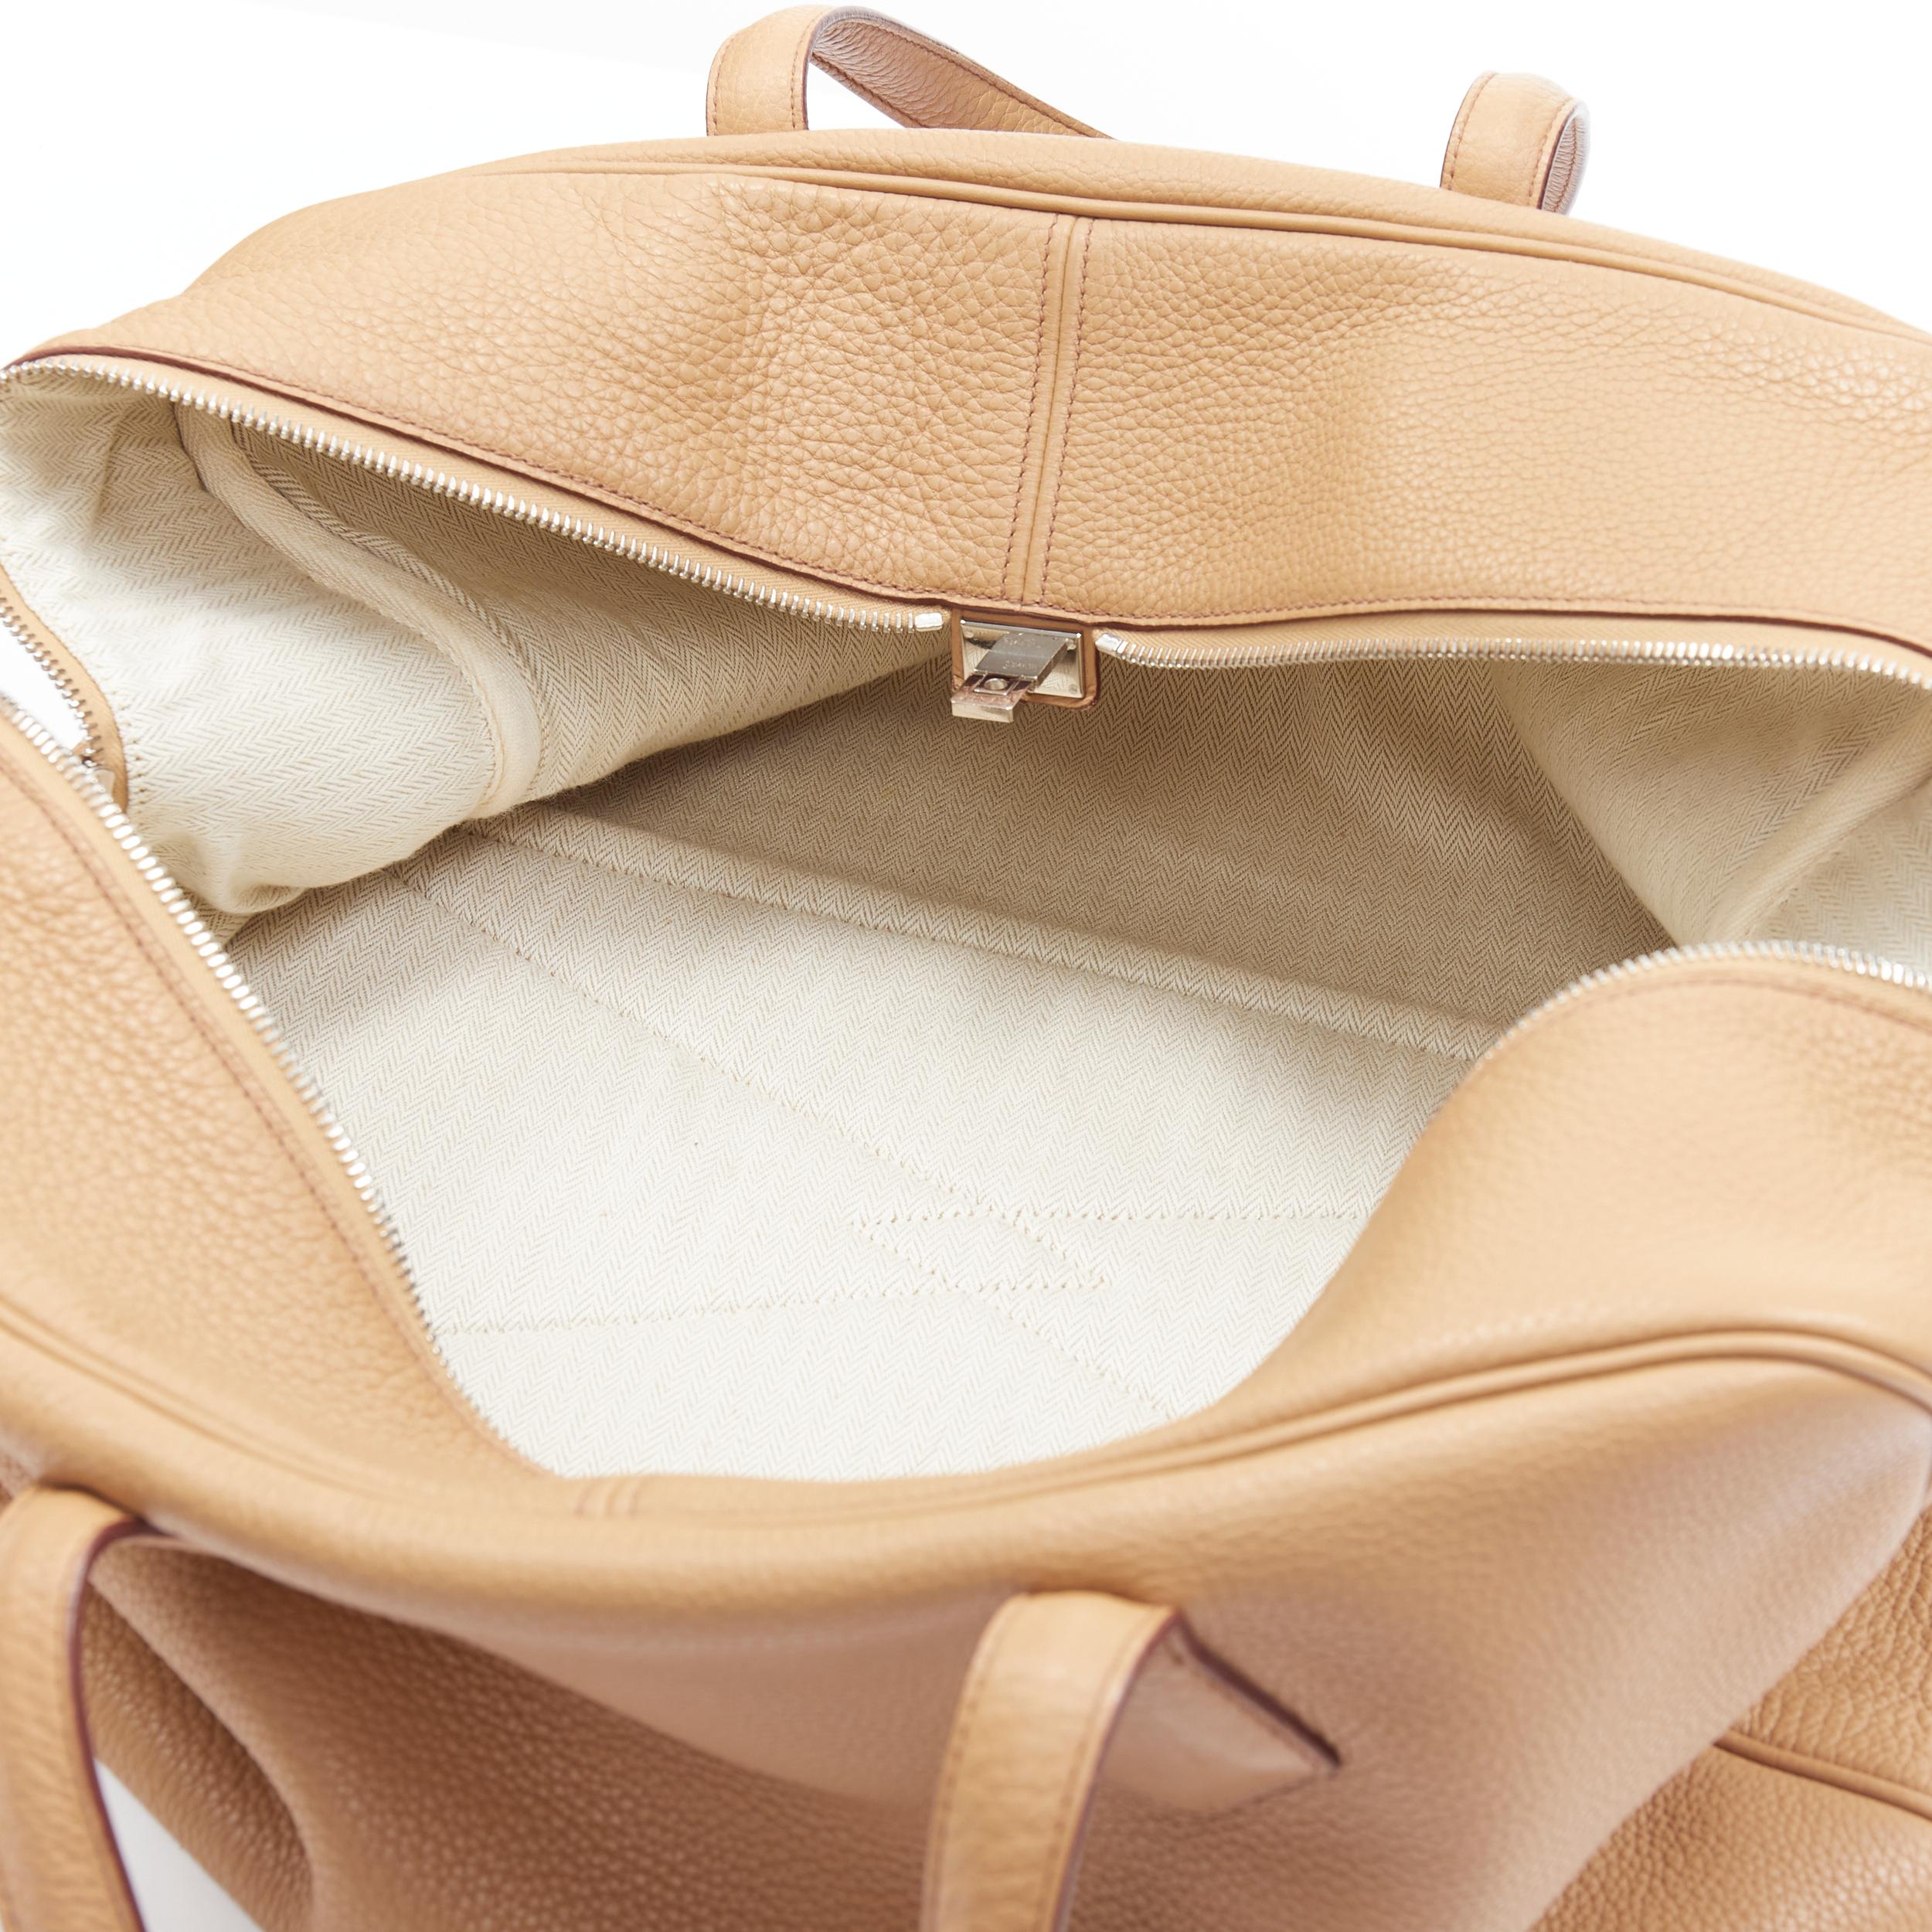 HERMES VIctoria 40 tan brown calf leather top handle travel satchel bag 4